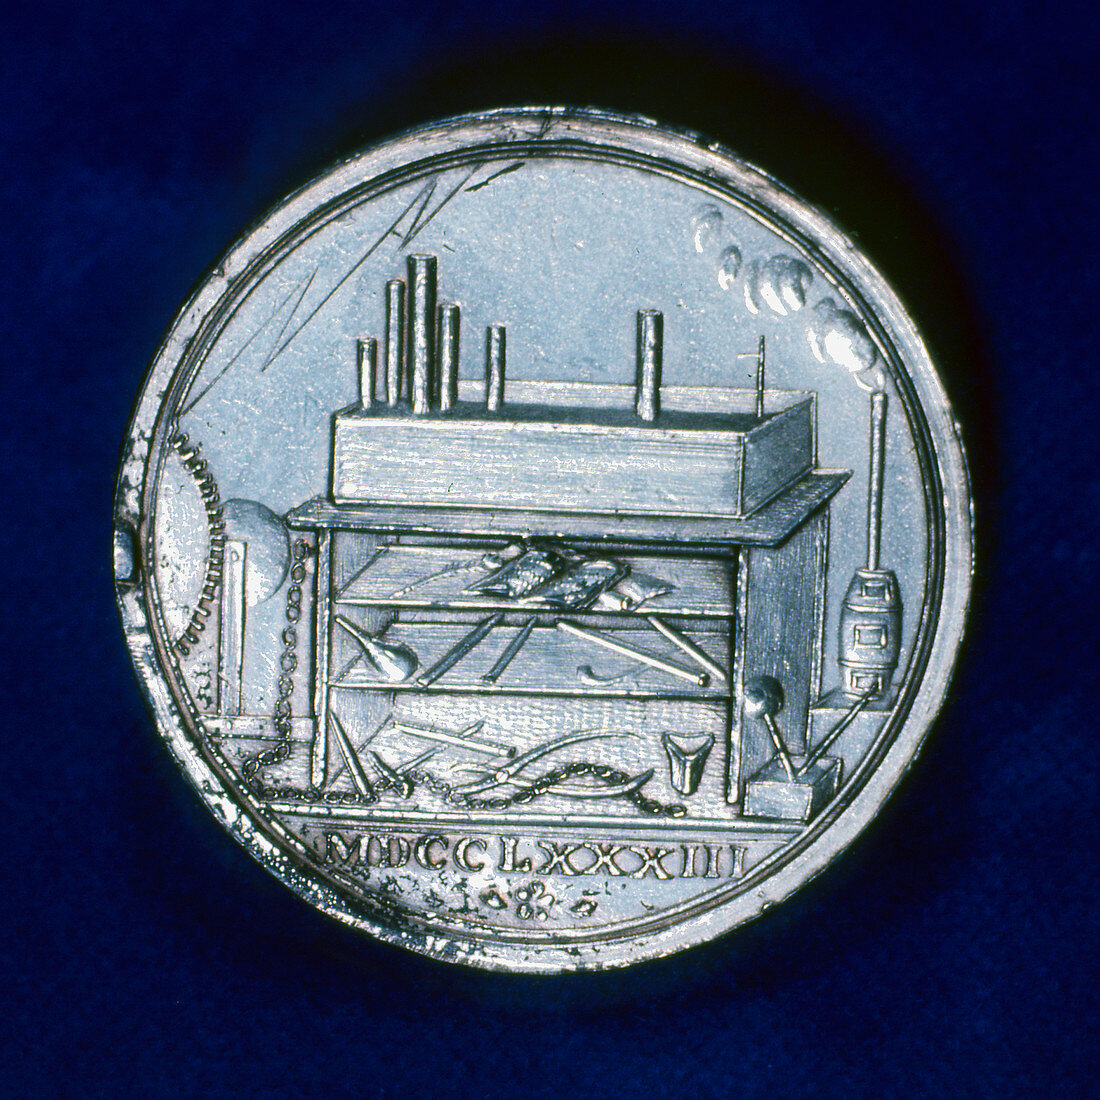 Commemorative medal for Joseph Priestley, English chemist